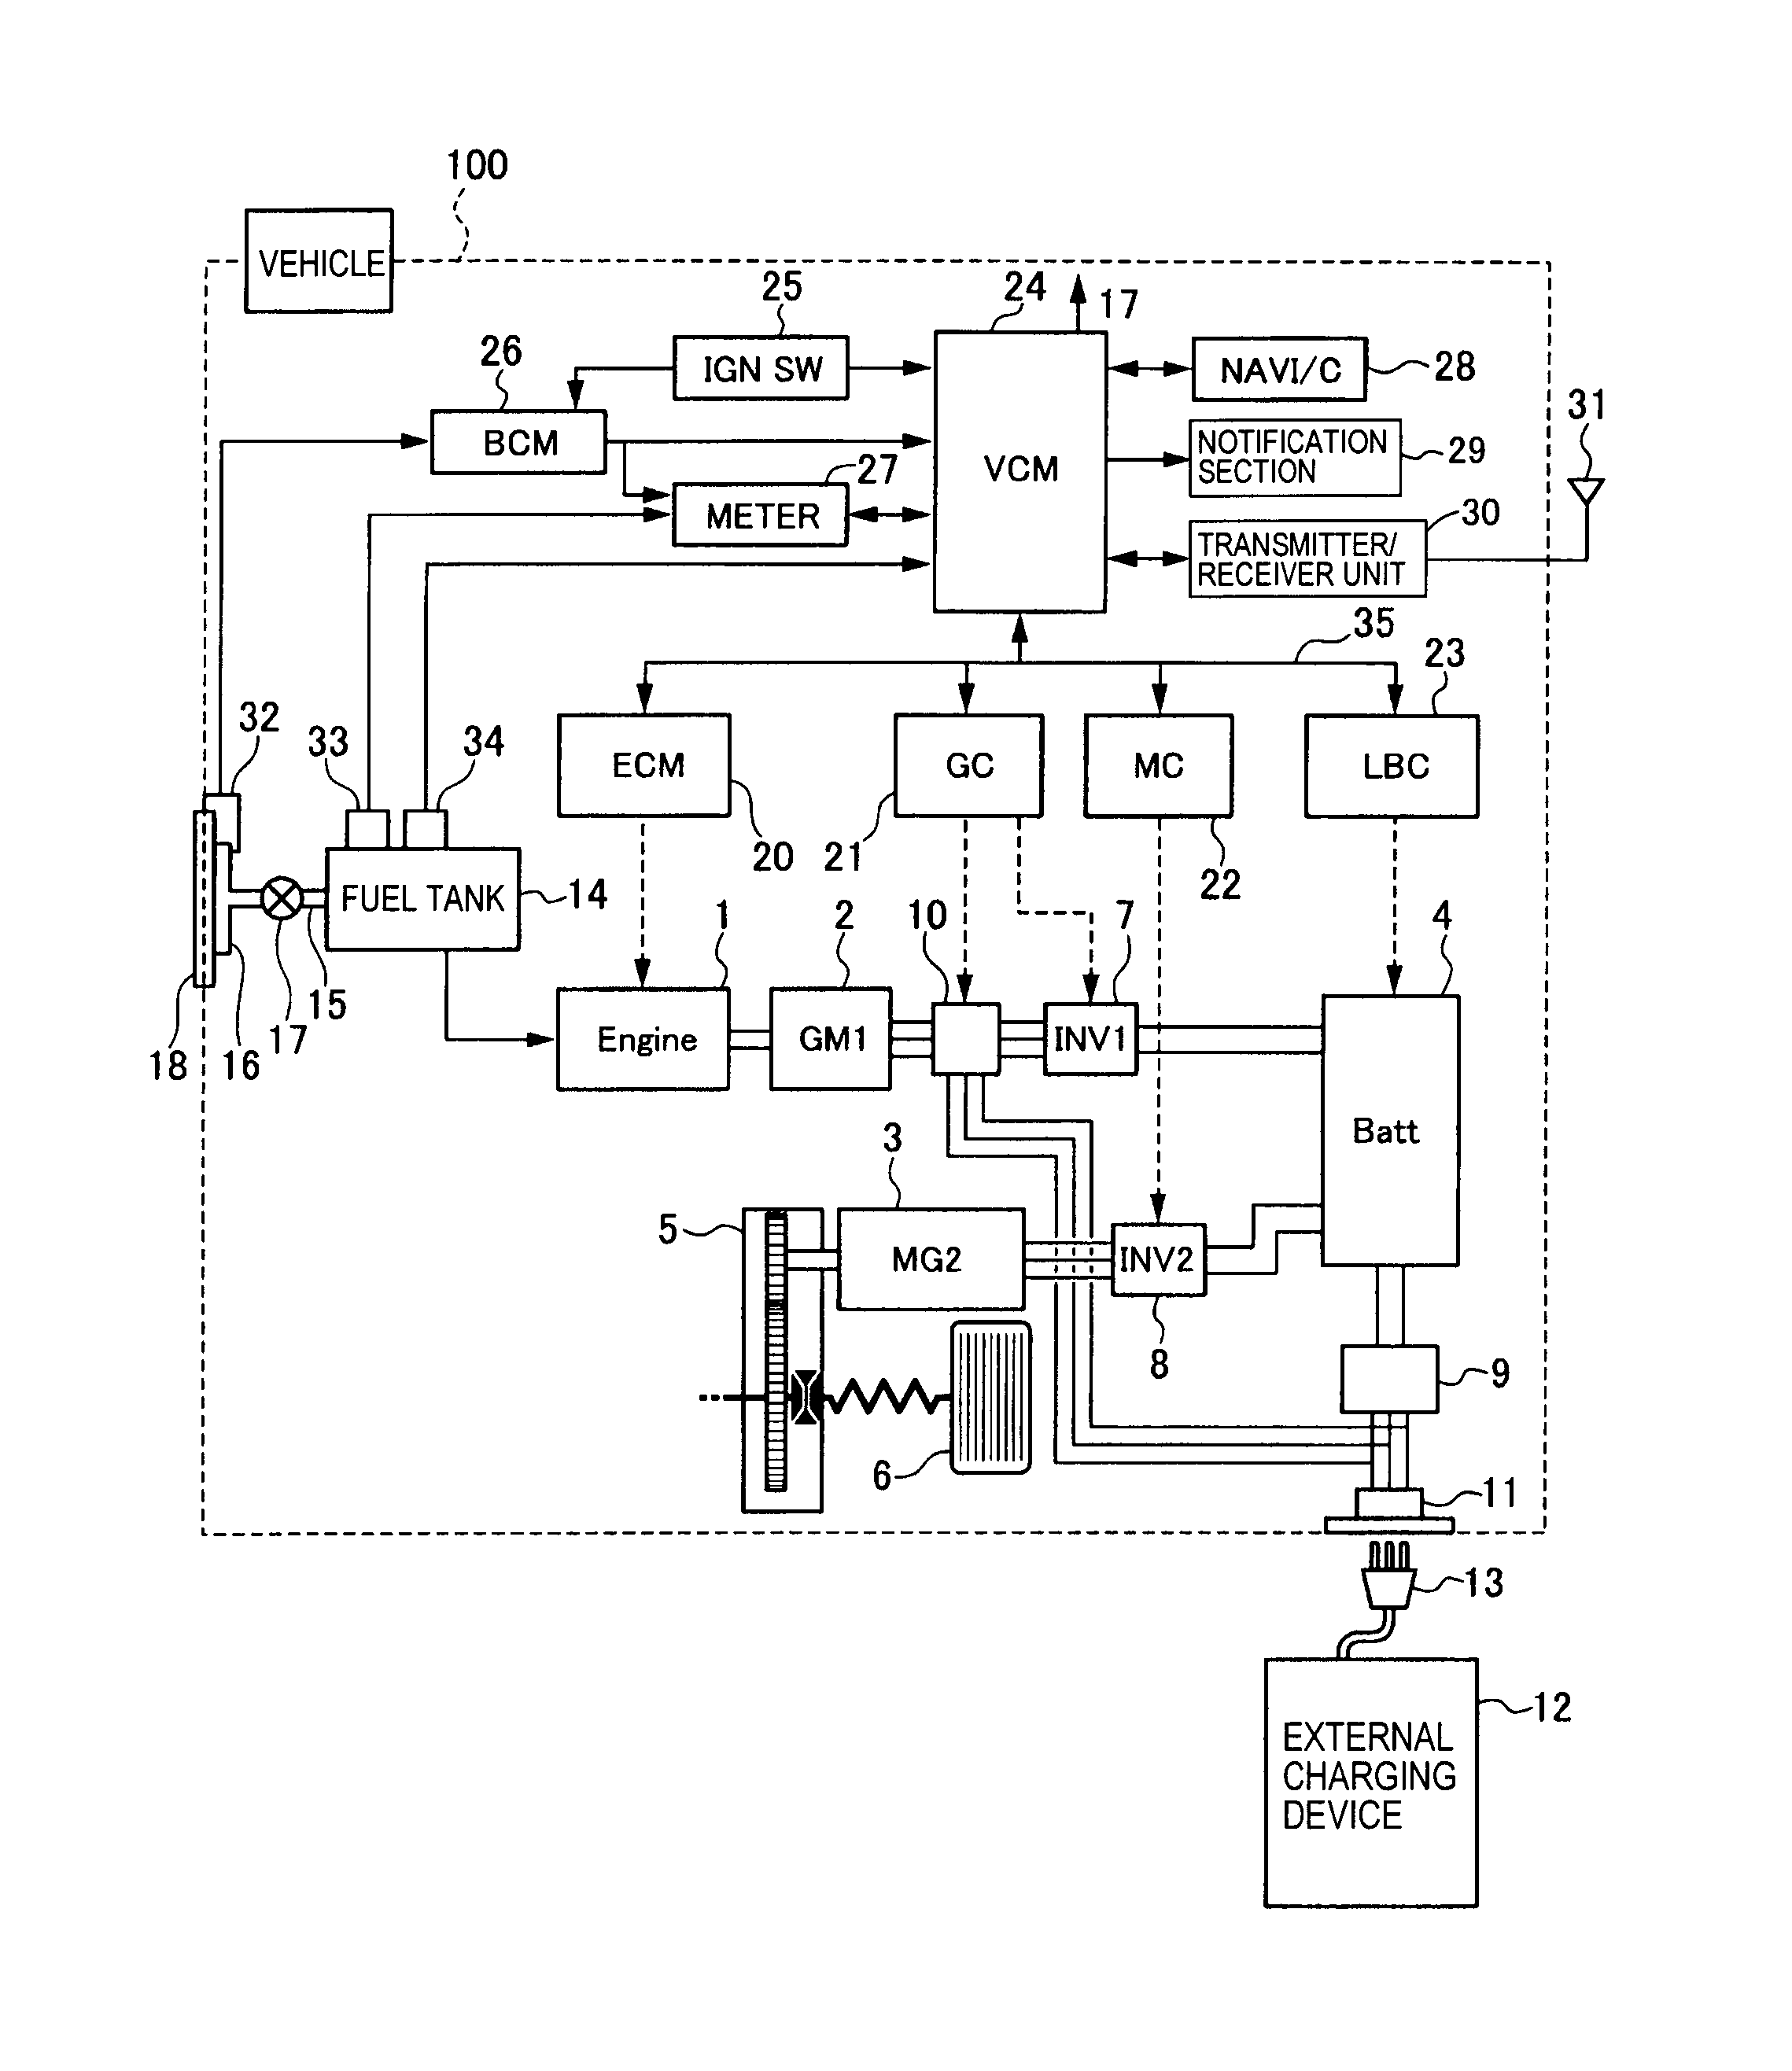 peavey t-60 wiring diagram